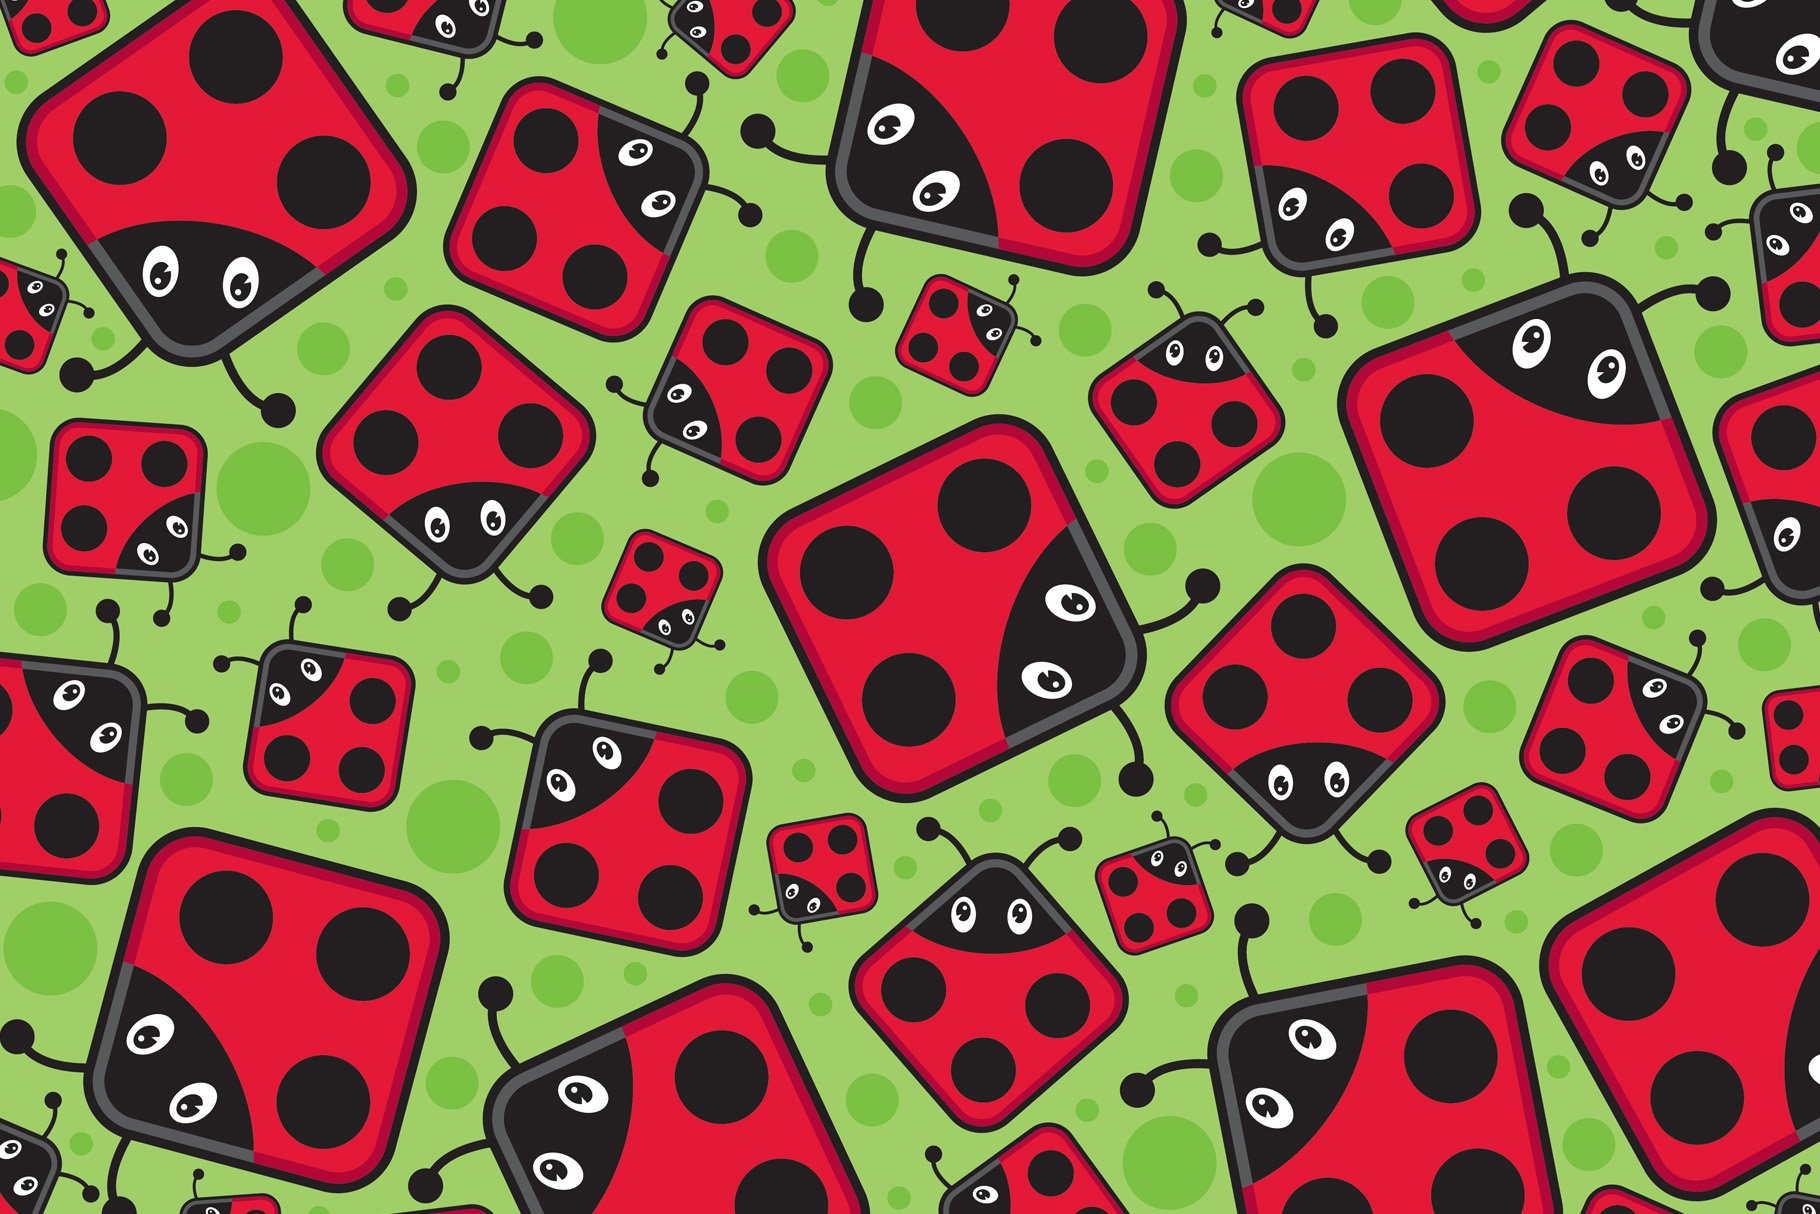 Cartoon Square Ladybird Pattern cover image.